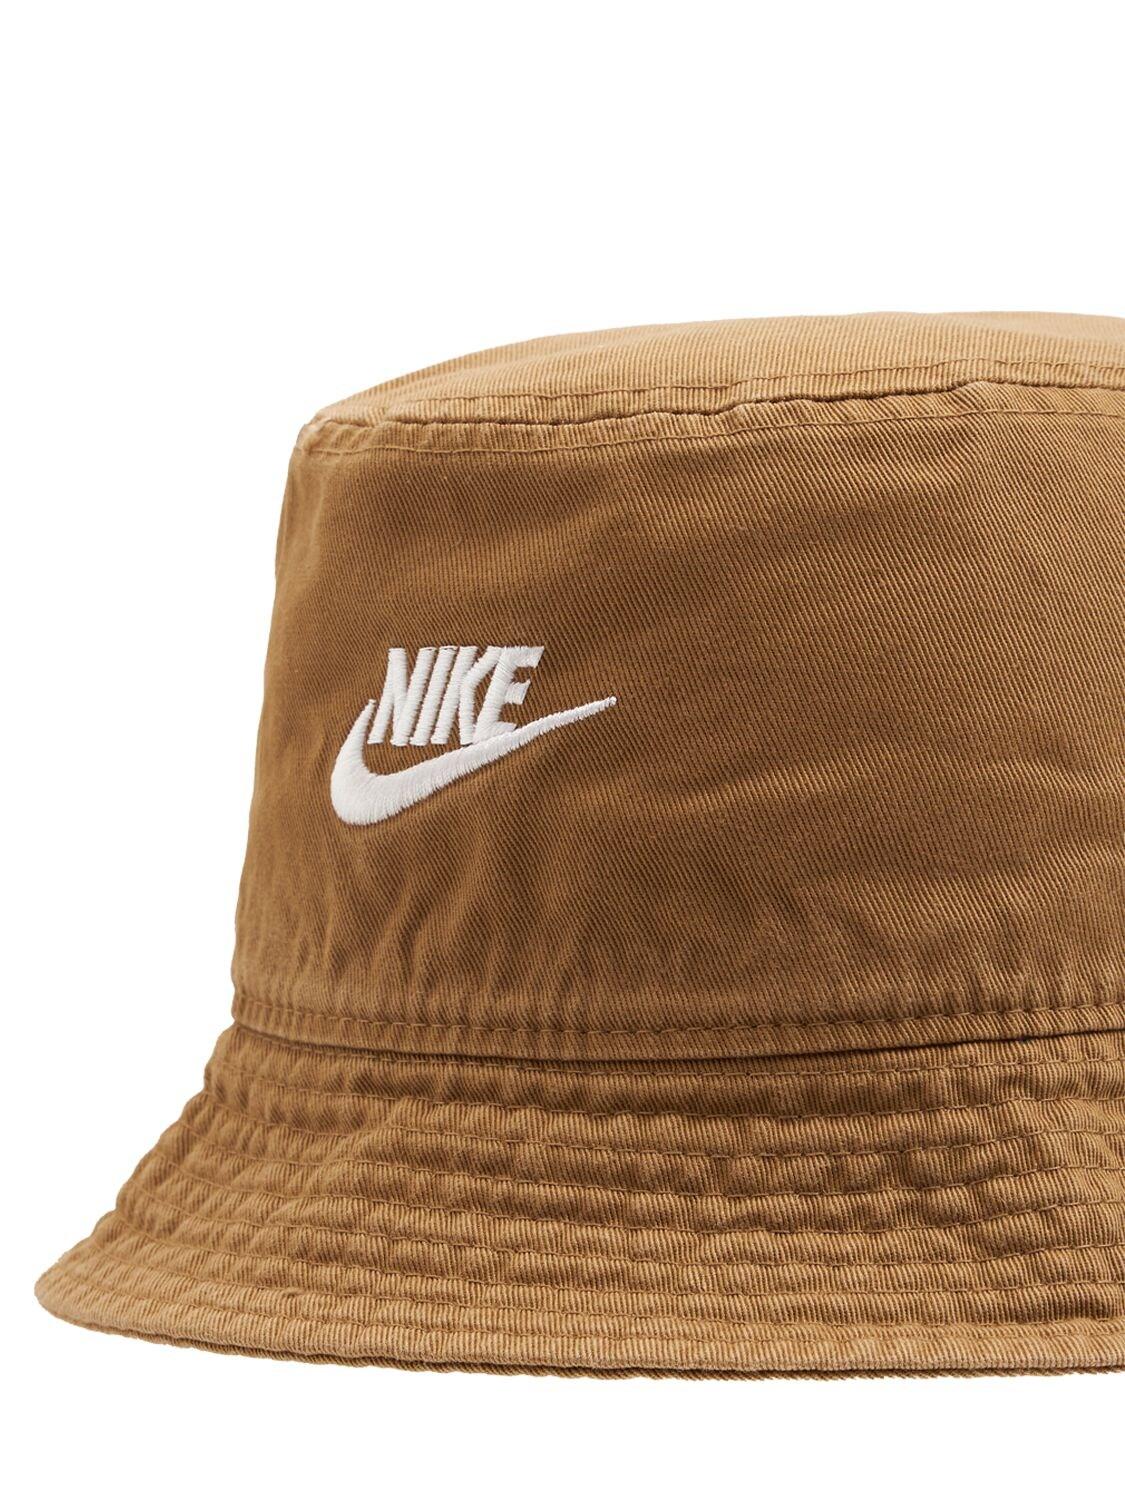 Nike Cotton Bucket Hat in Brown | Lyst